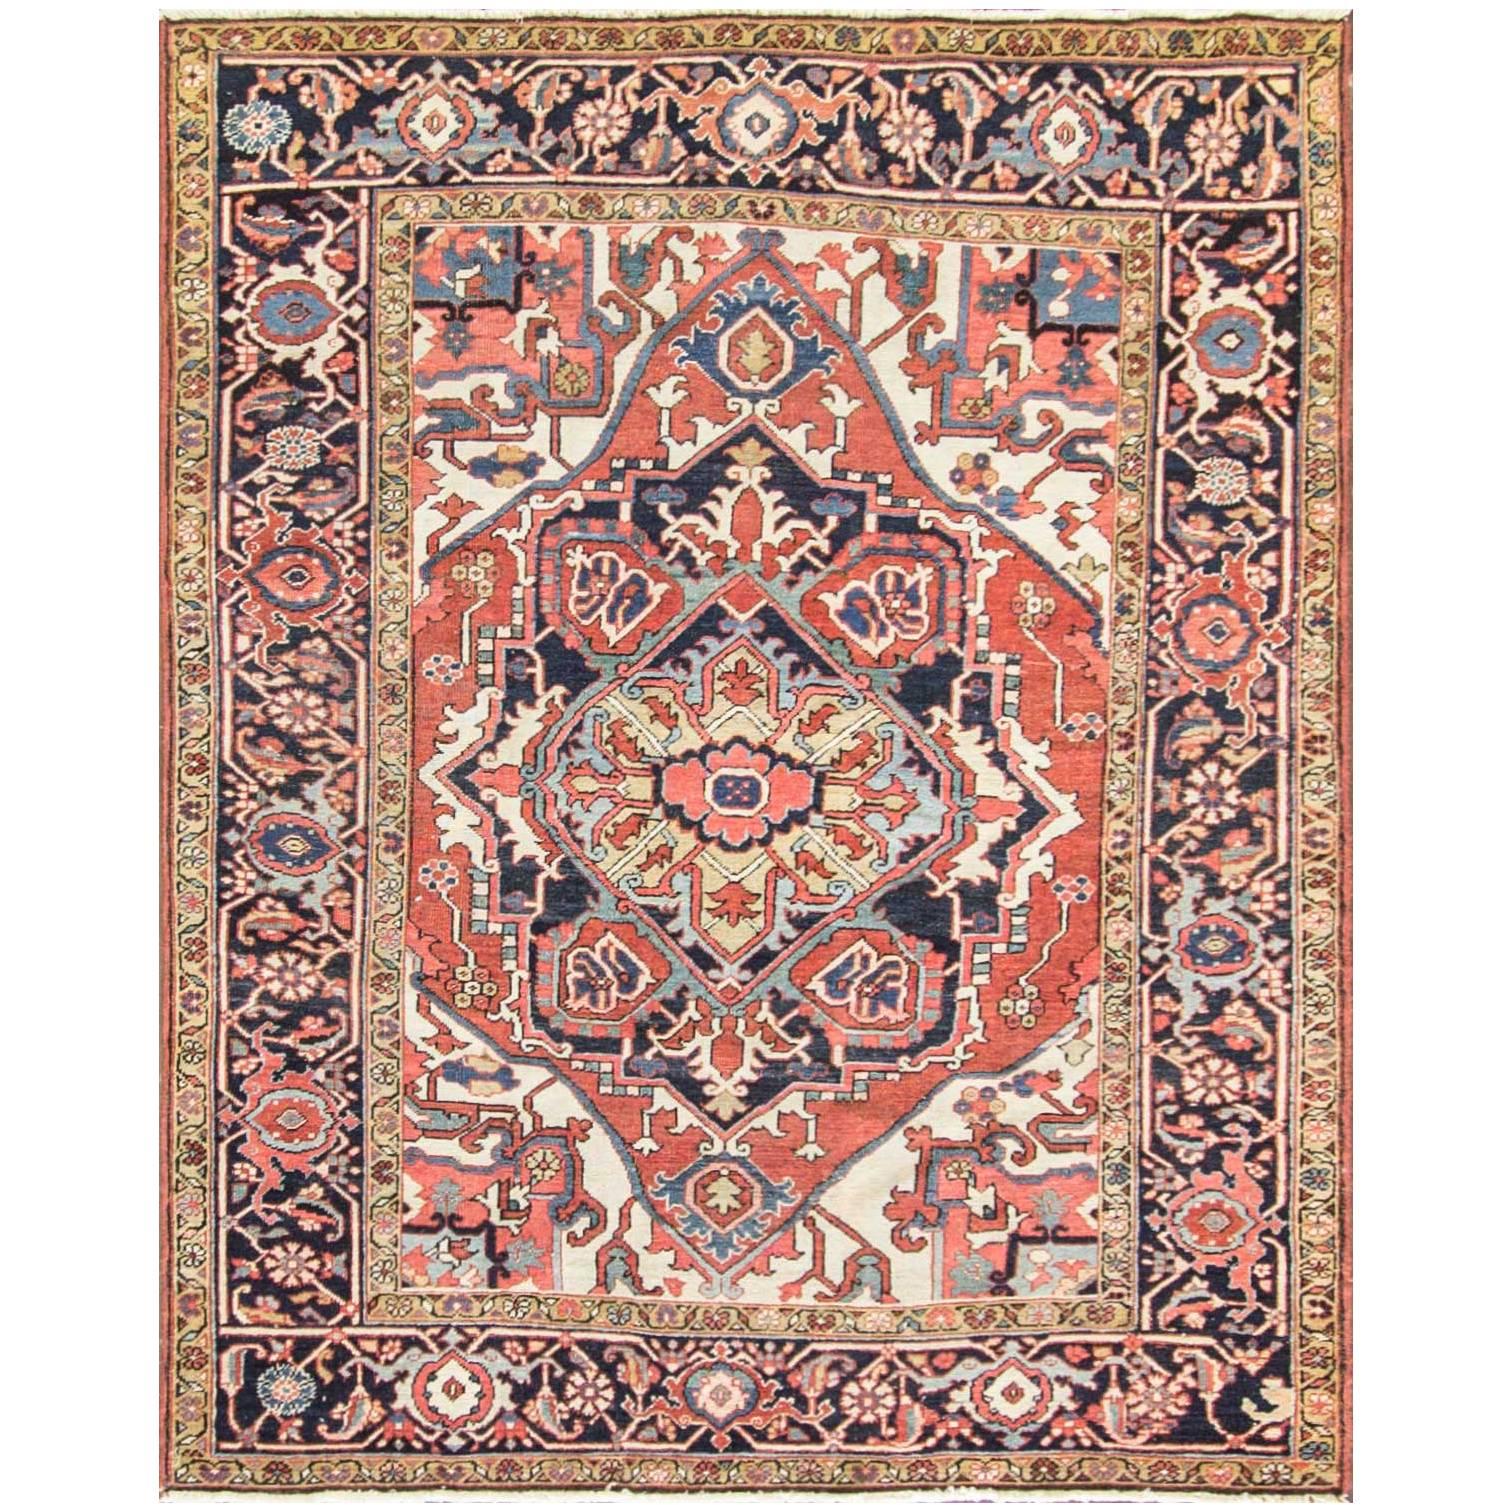  Antiker persischer Serapi-Teppich, 4'11" x 6'3"